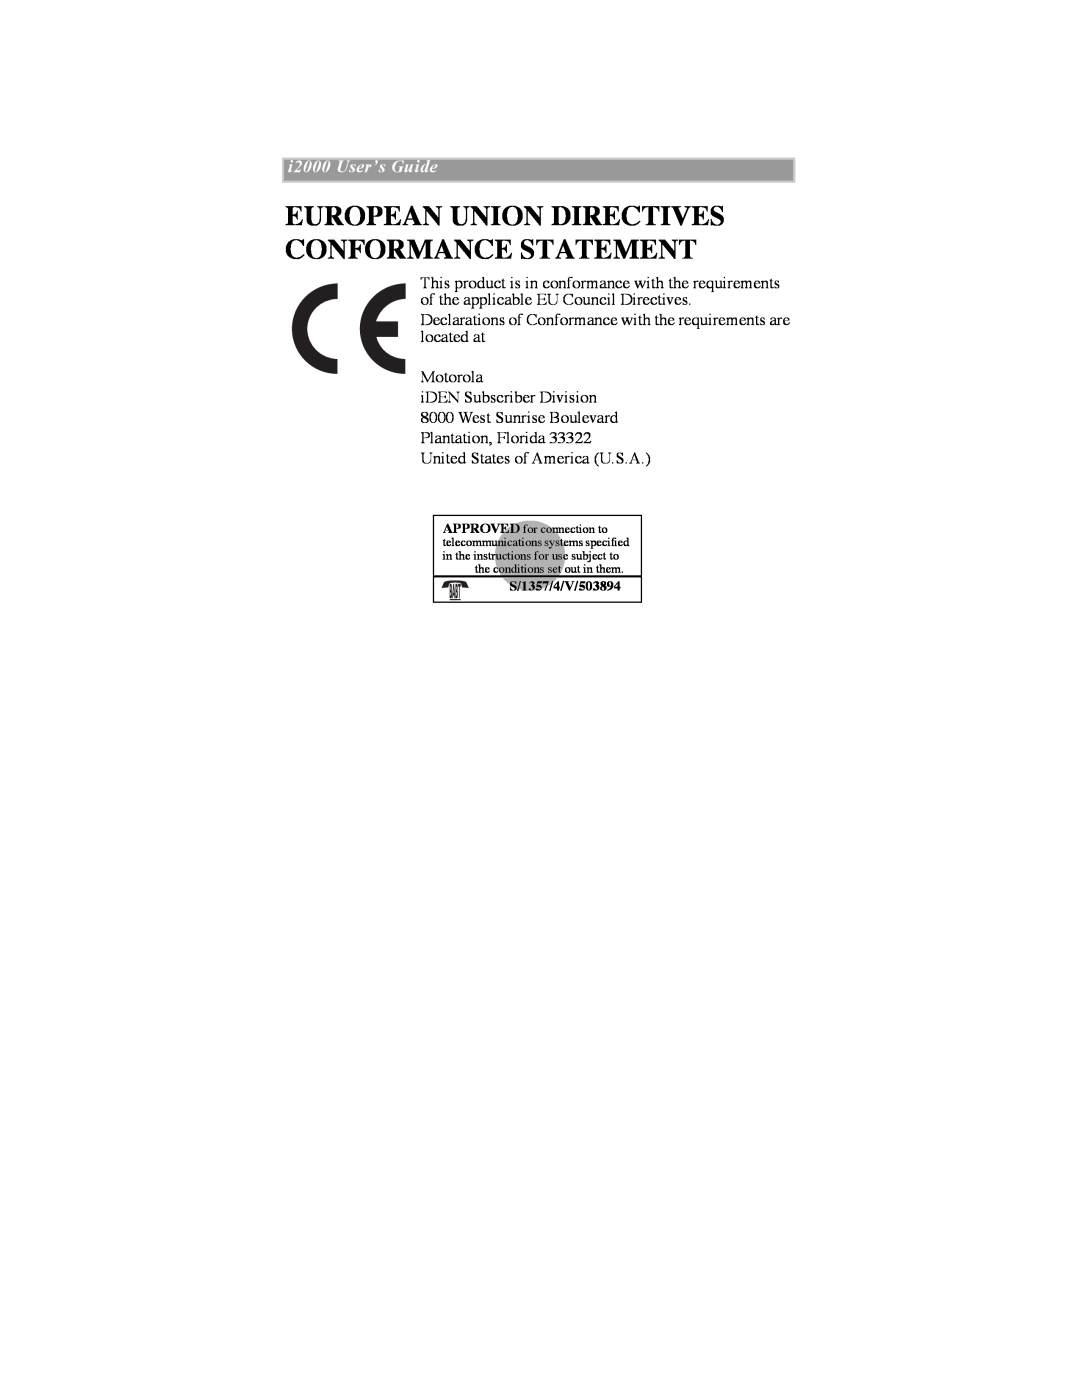 Motorola iDEN manual European Union Directives Conformance Statement, i2000 UserÕs Guide, S/1357/4/V/503894 